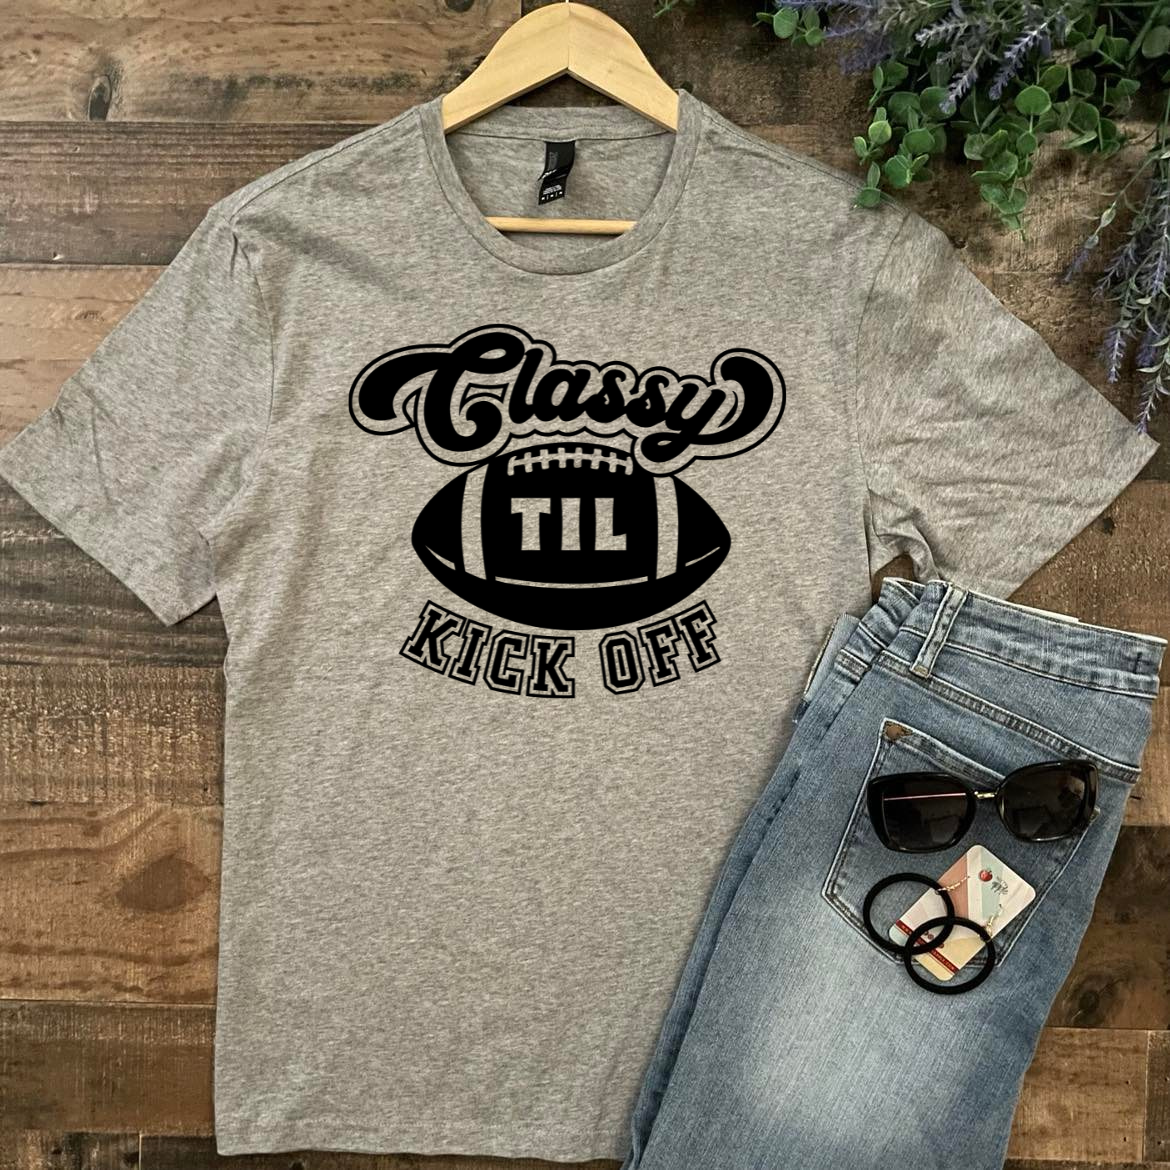 Classy Til Kick Off - Football Graphic Tee Shirt